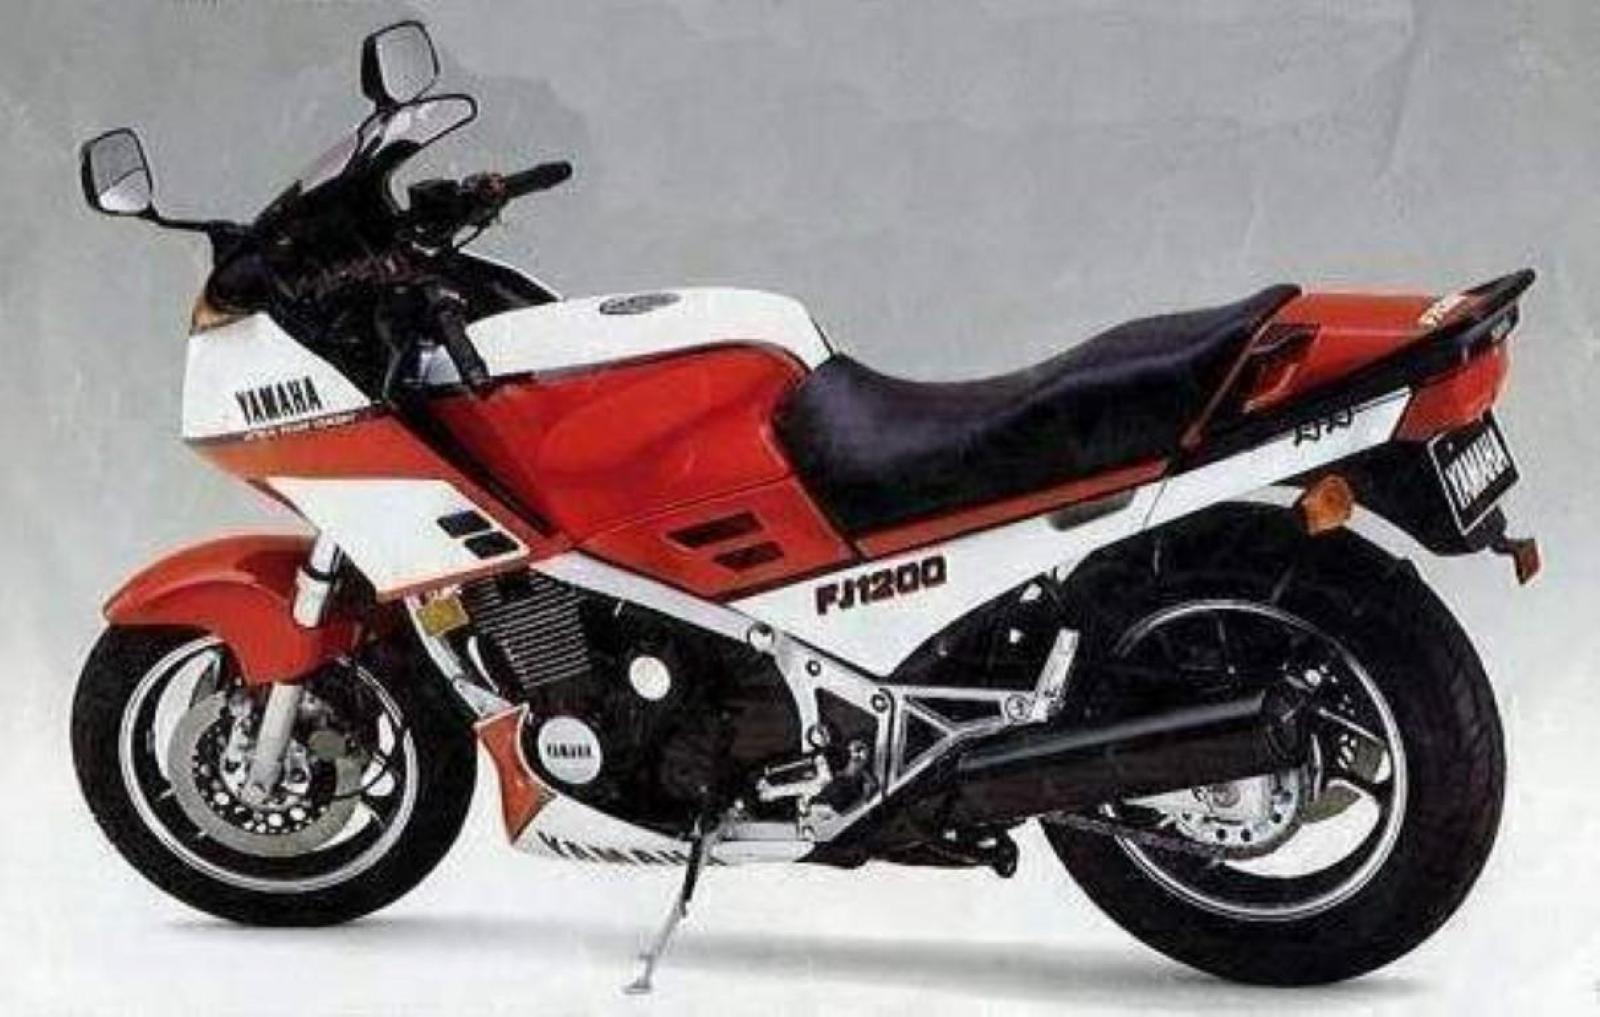 Yamaha FJ 1200 (reduced effect) Photos, Informations 